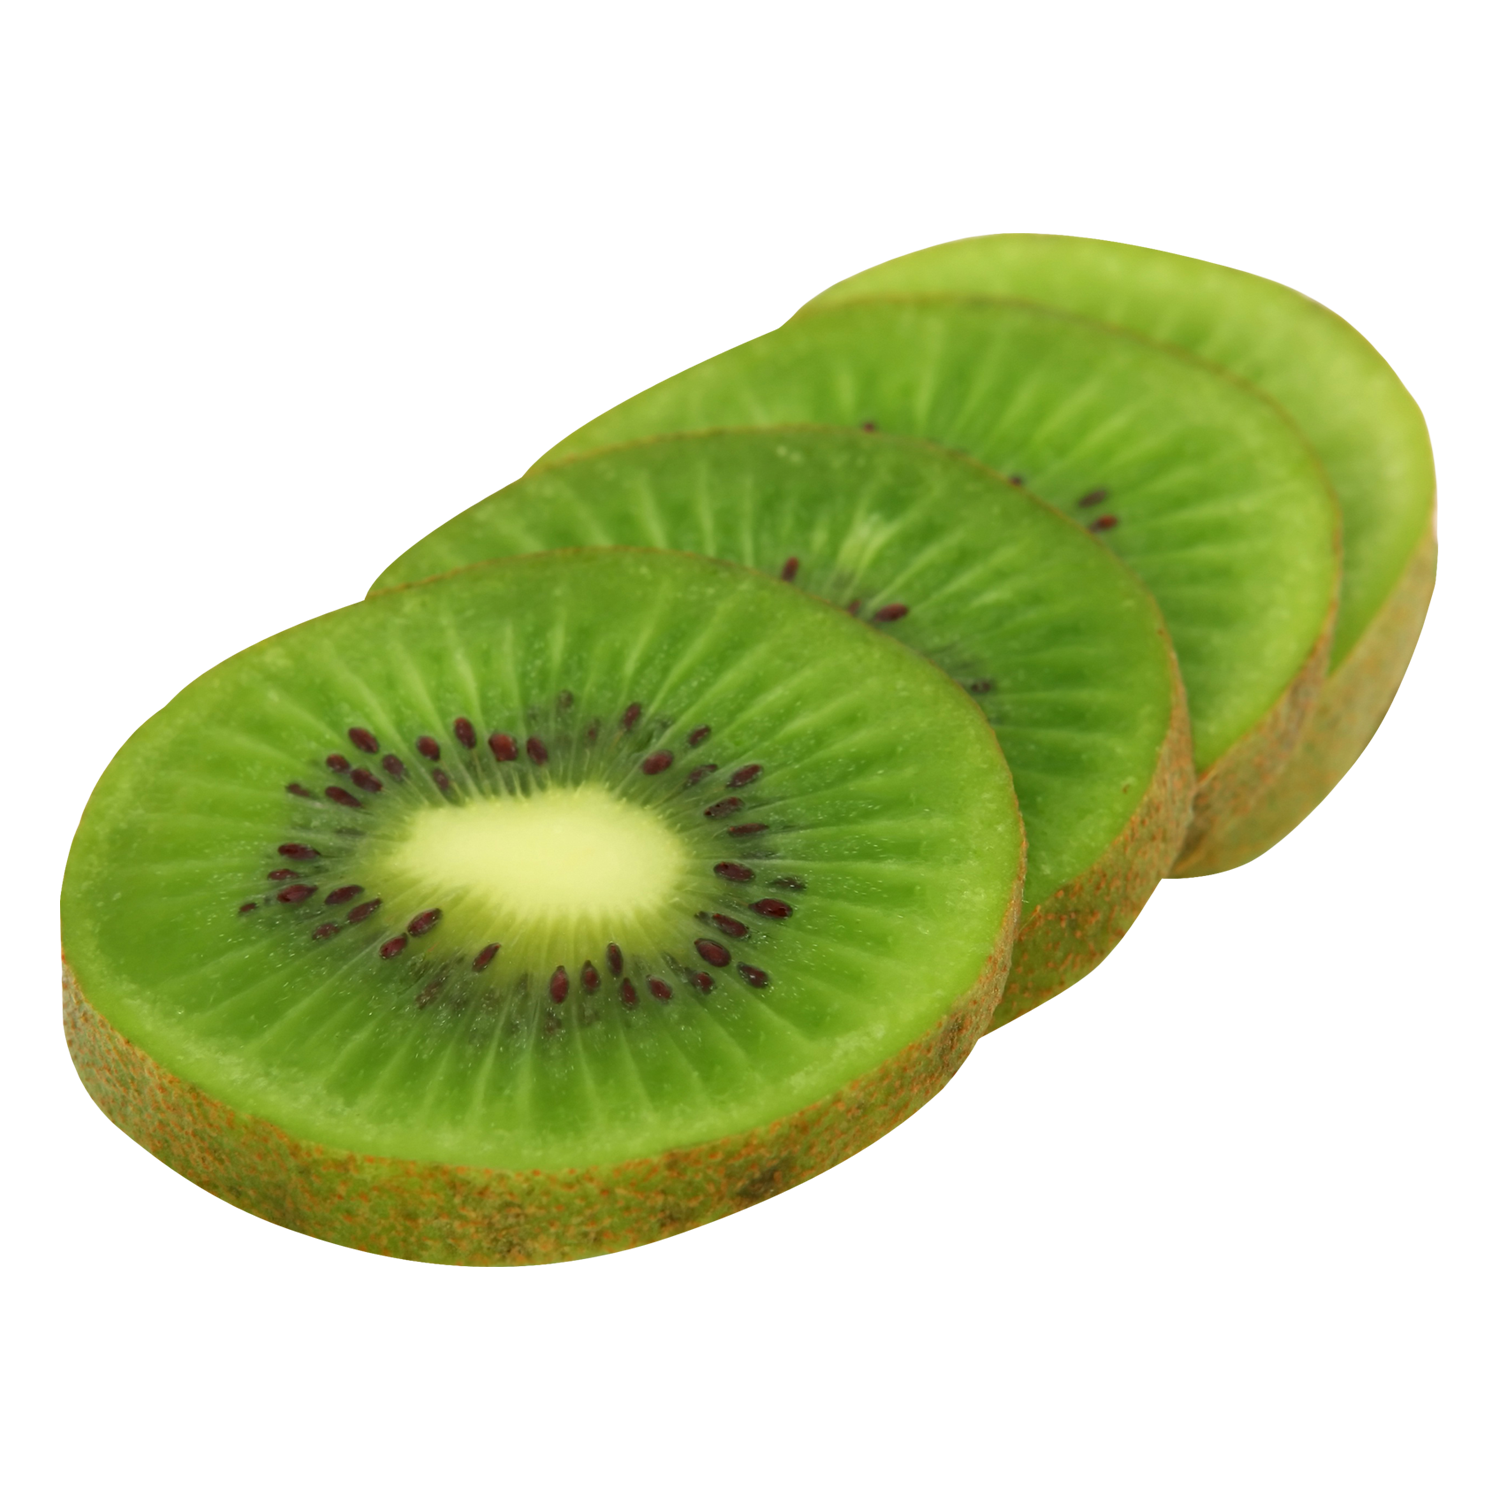 Kiwi Slice  Transparent Image